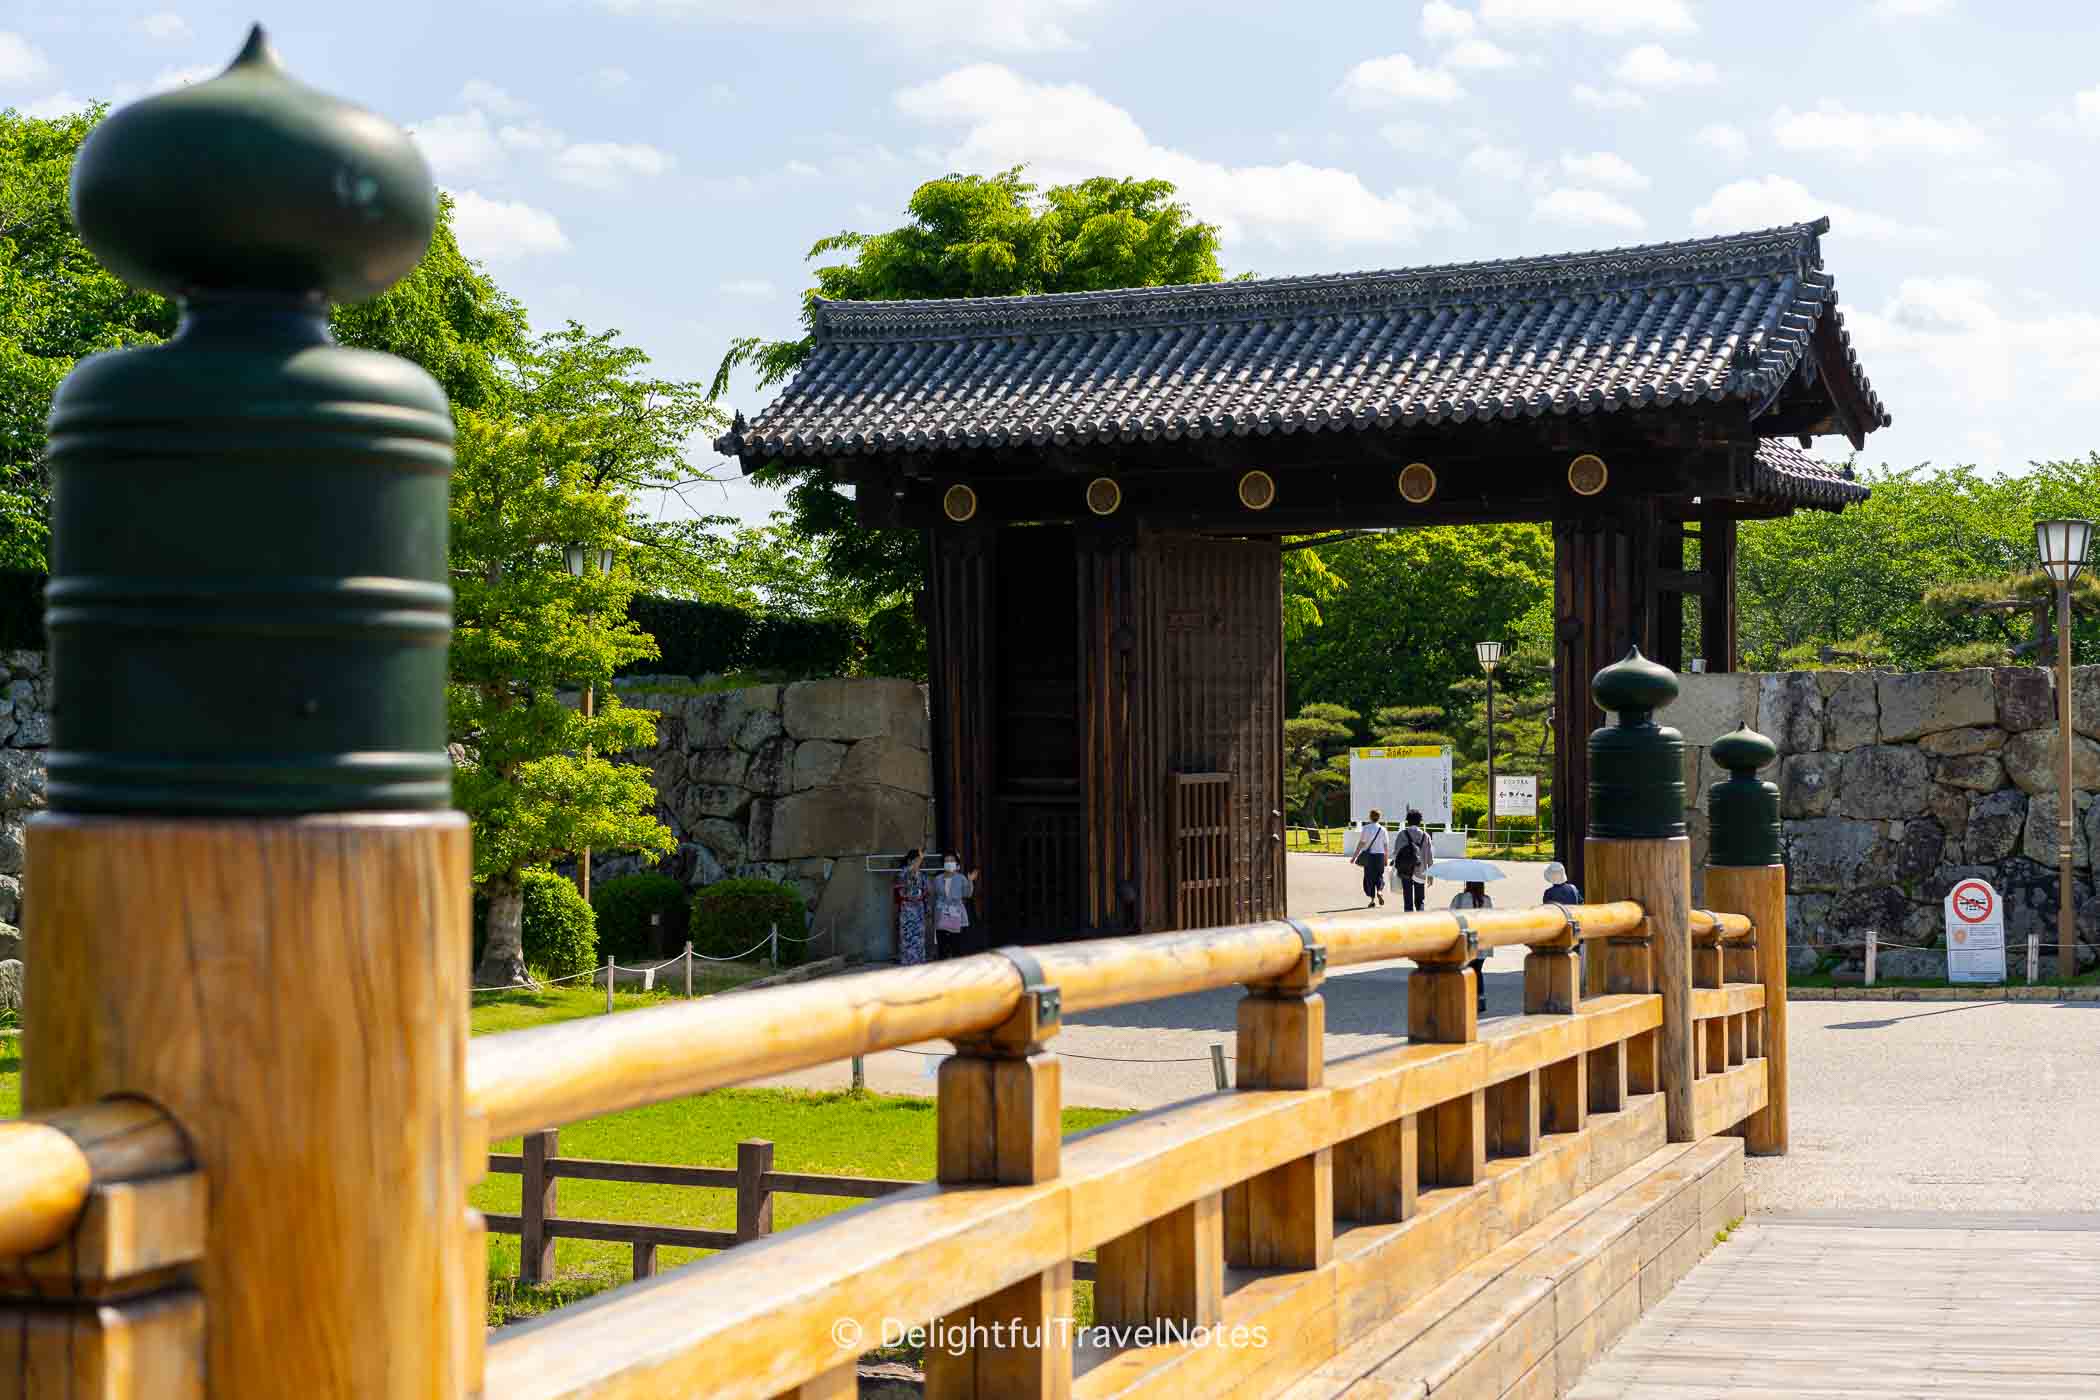 Otemon Gate - main entrance of Himeji Castle.